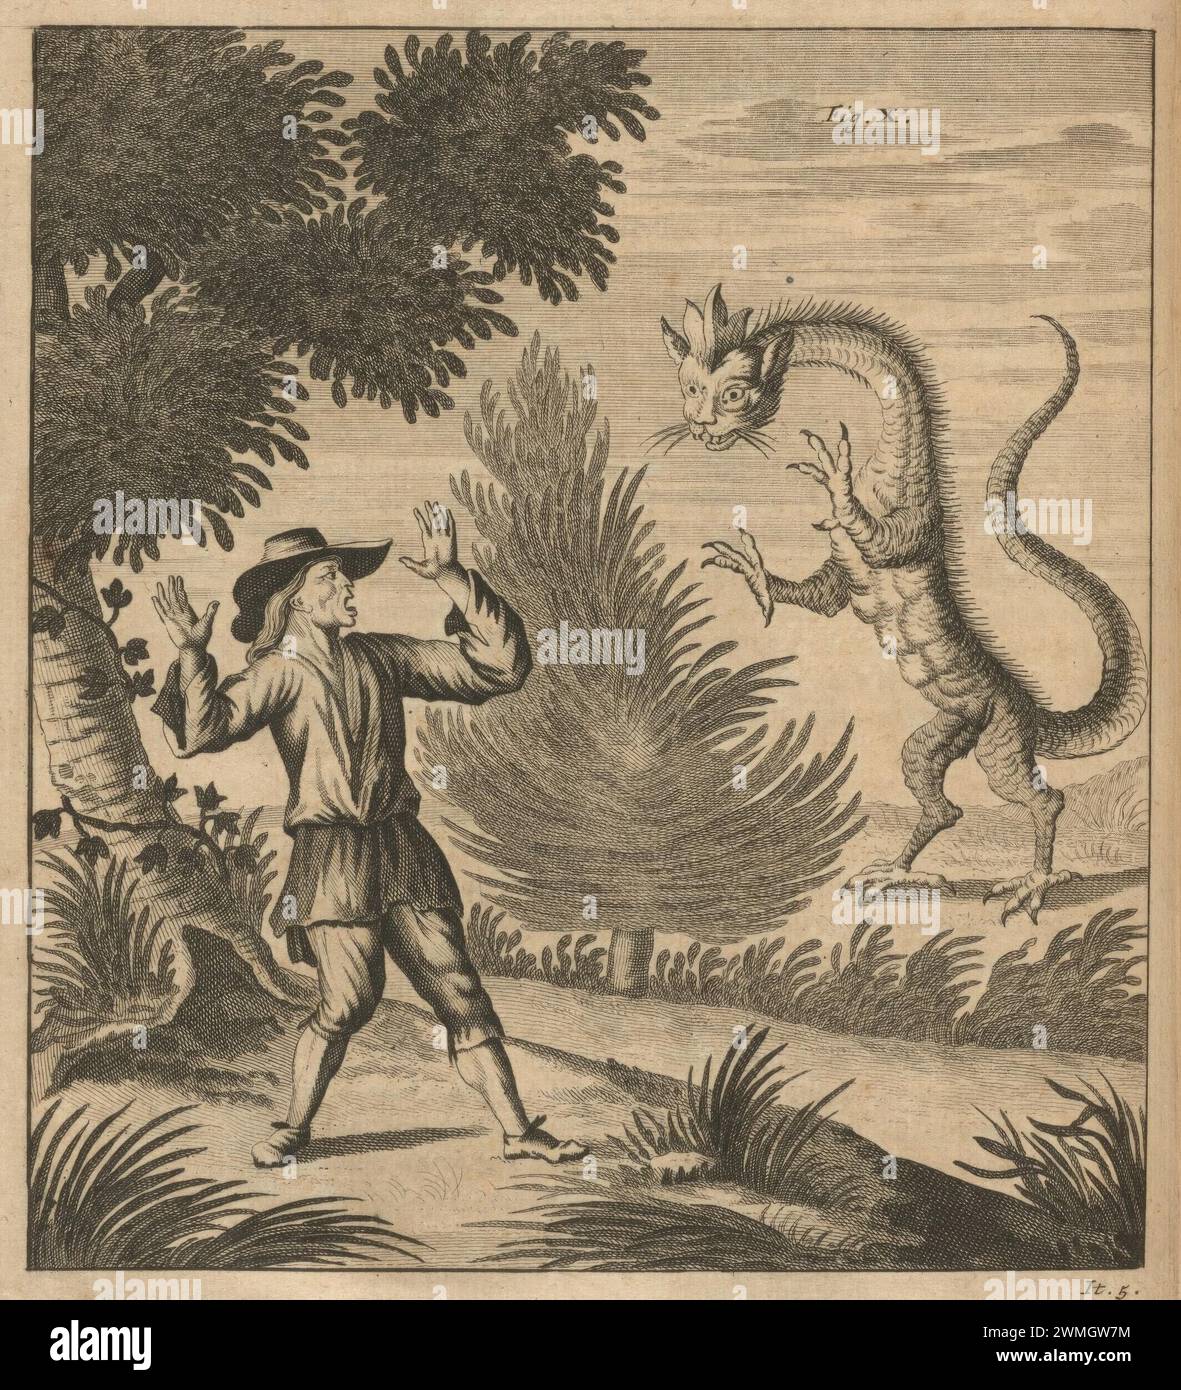 A traveller encounters a Tatzelwurm in the Swiss Alps. Engraving from Johann Jacob Scheuchzer's 'Itinera Alpina,' 1723. Stock Photo